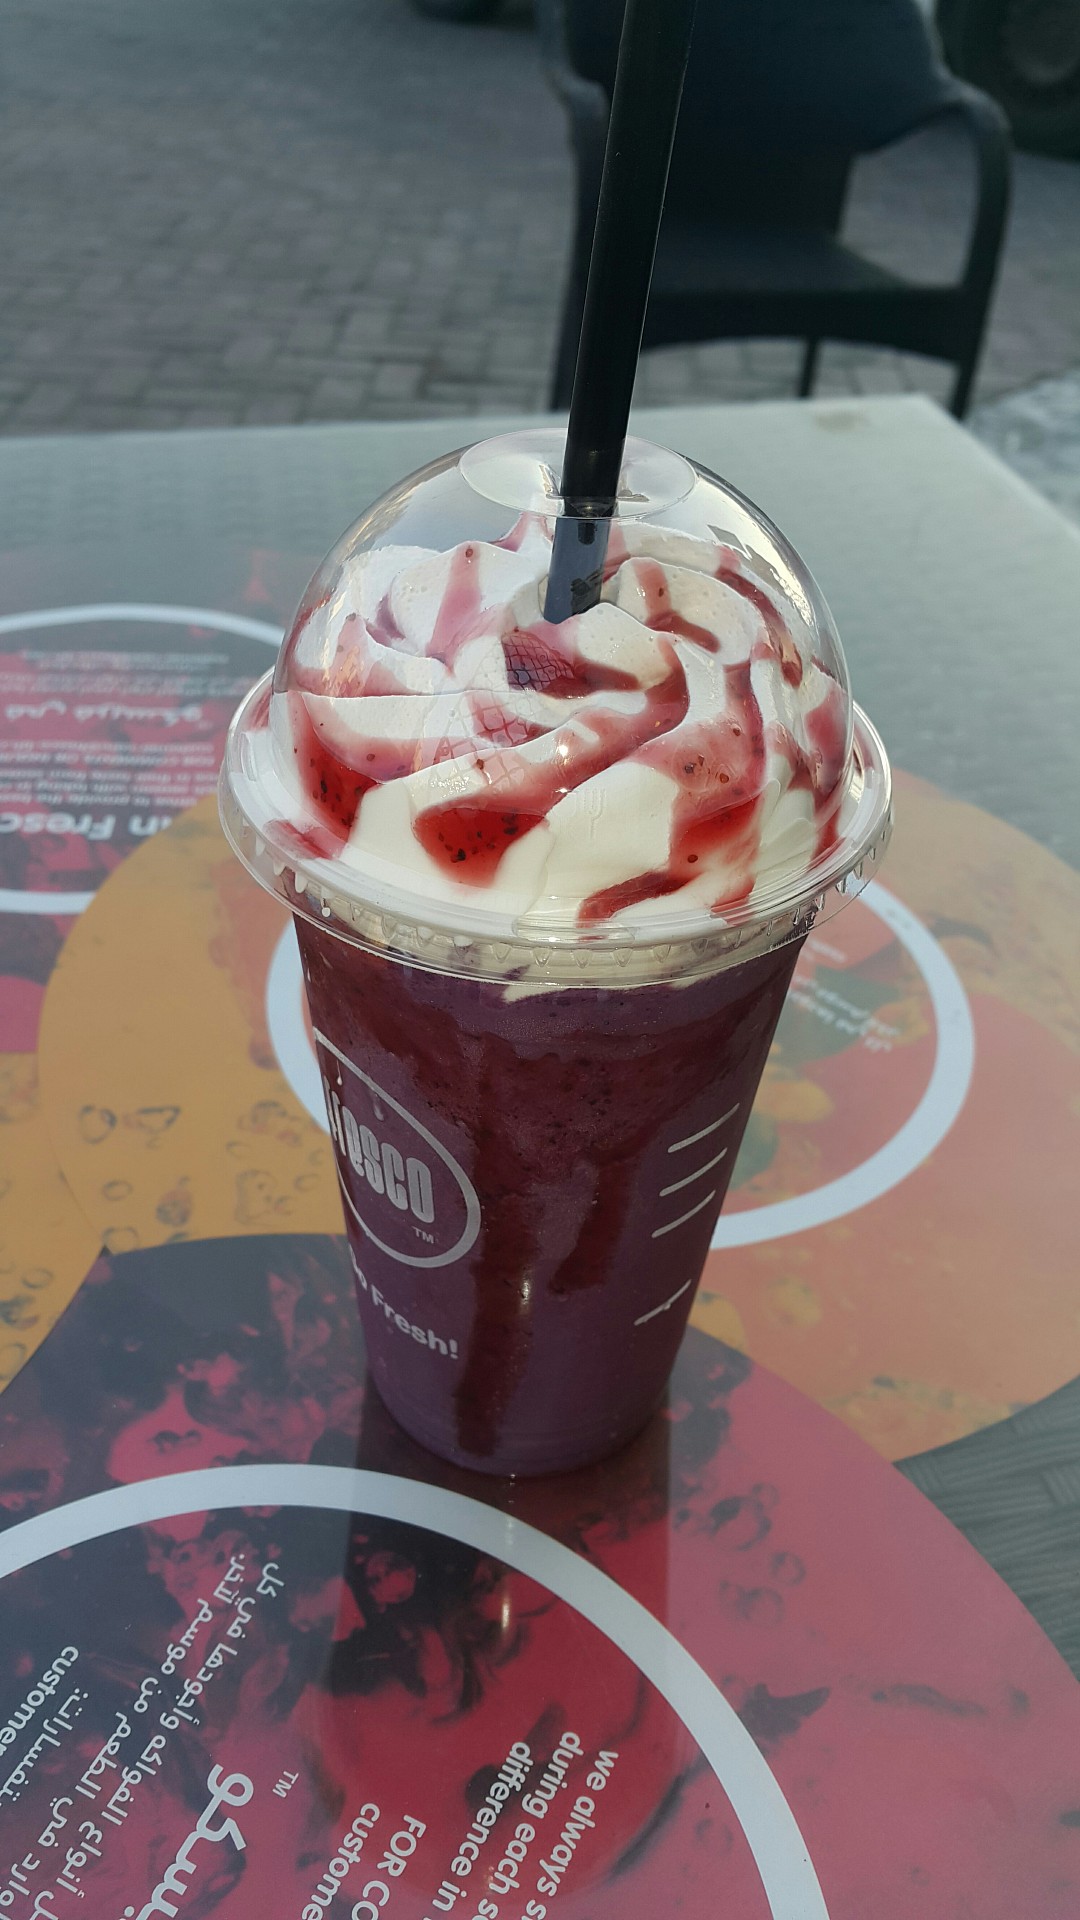 My favourite smoothie from Fresco 😍😍😍 (blueberry milkshake) 👅👅 @ Fresco Juice Bar & Cafe - Bahrain